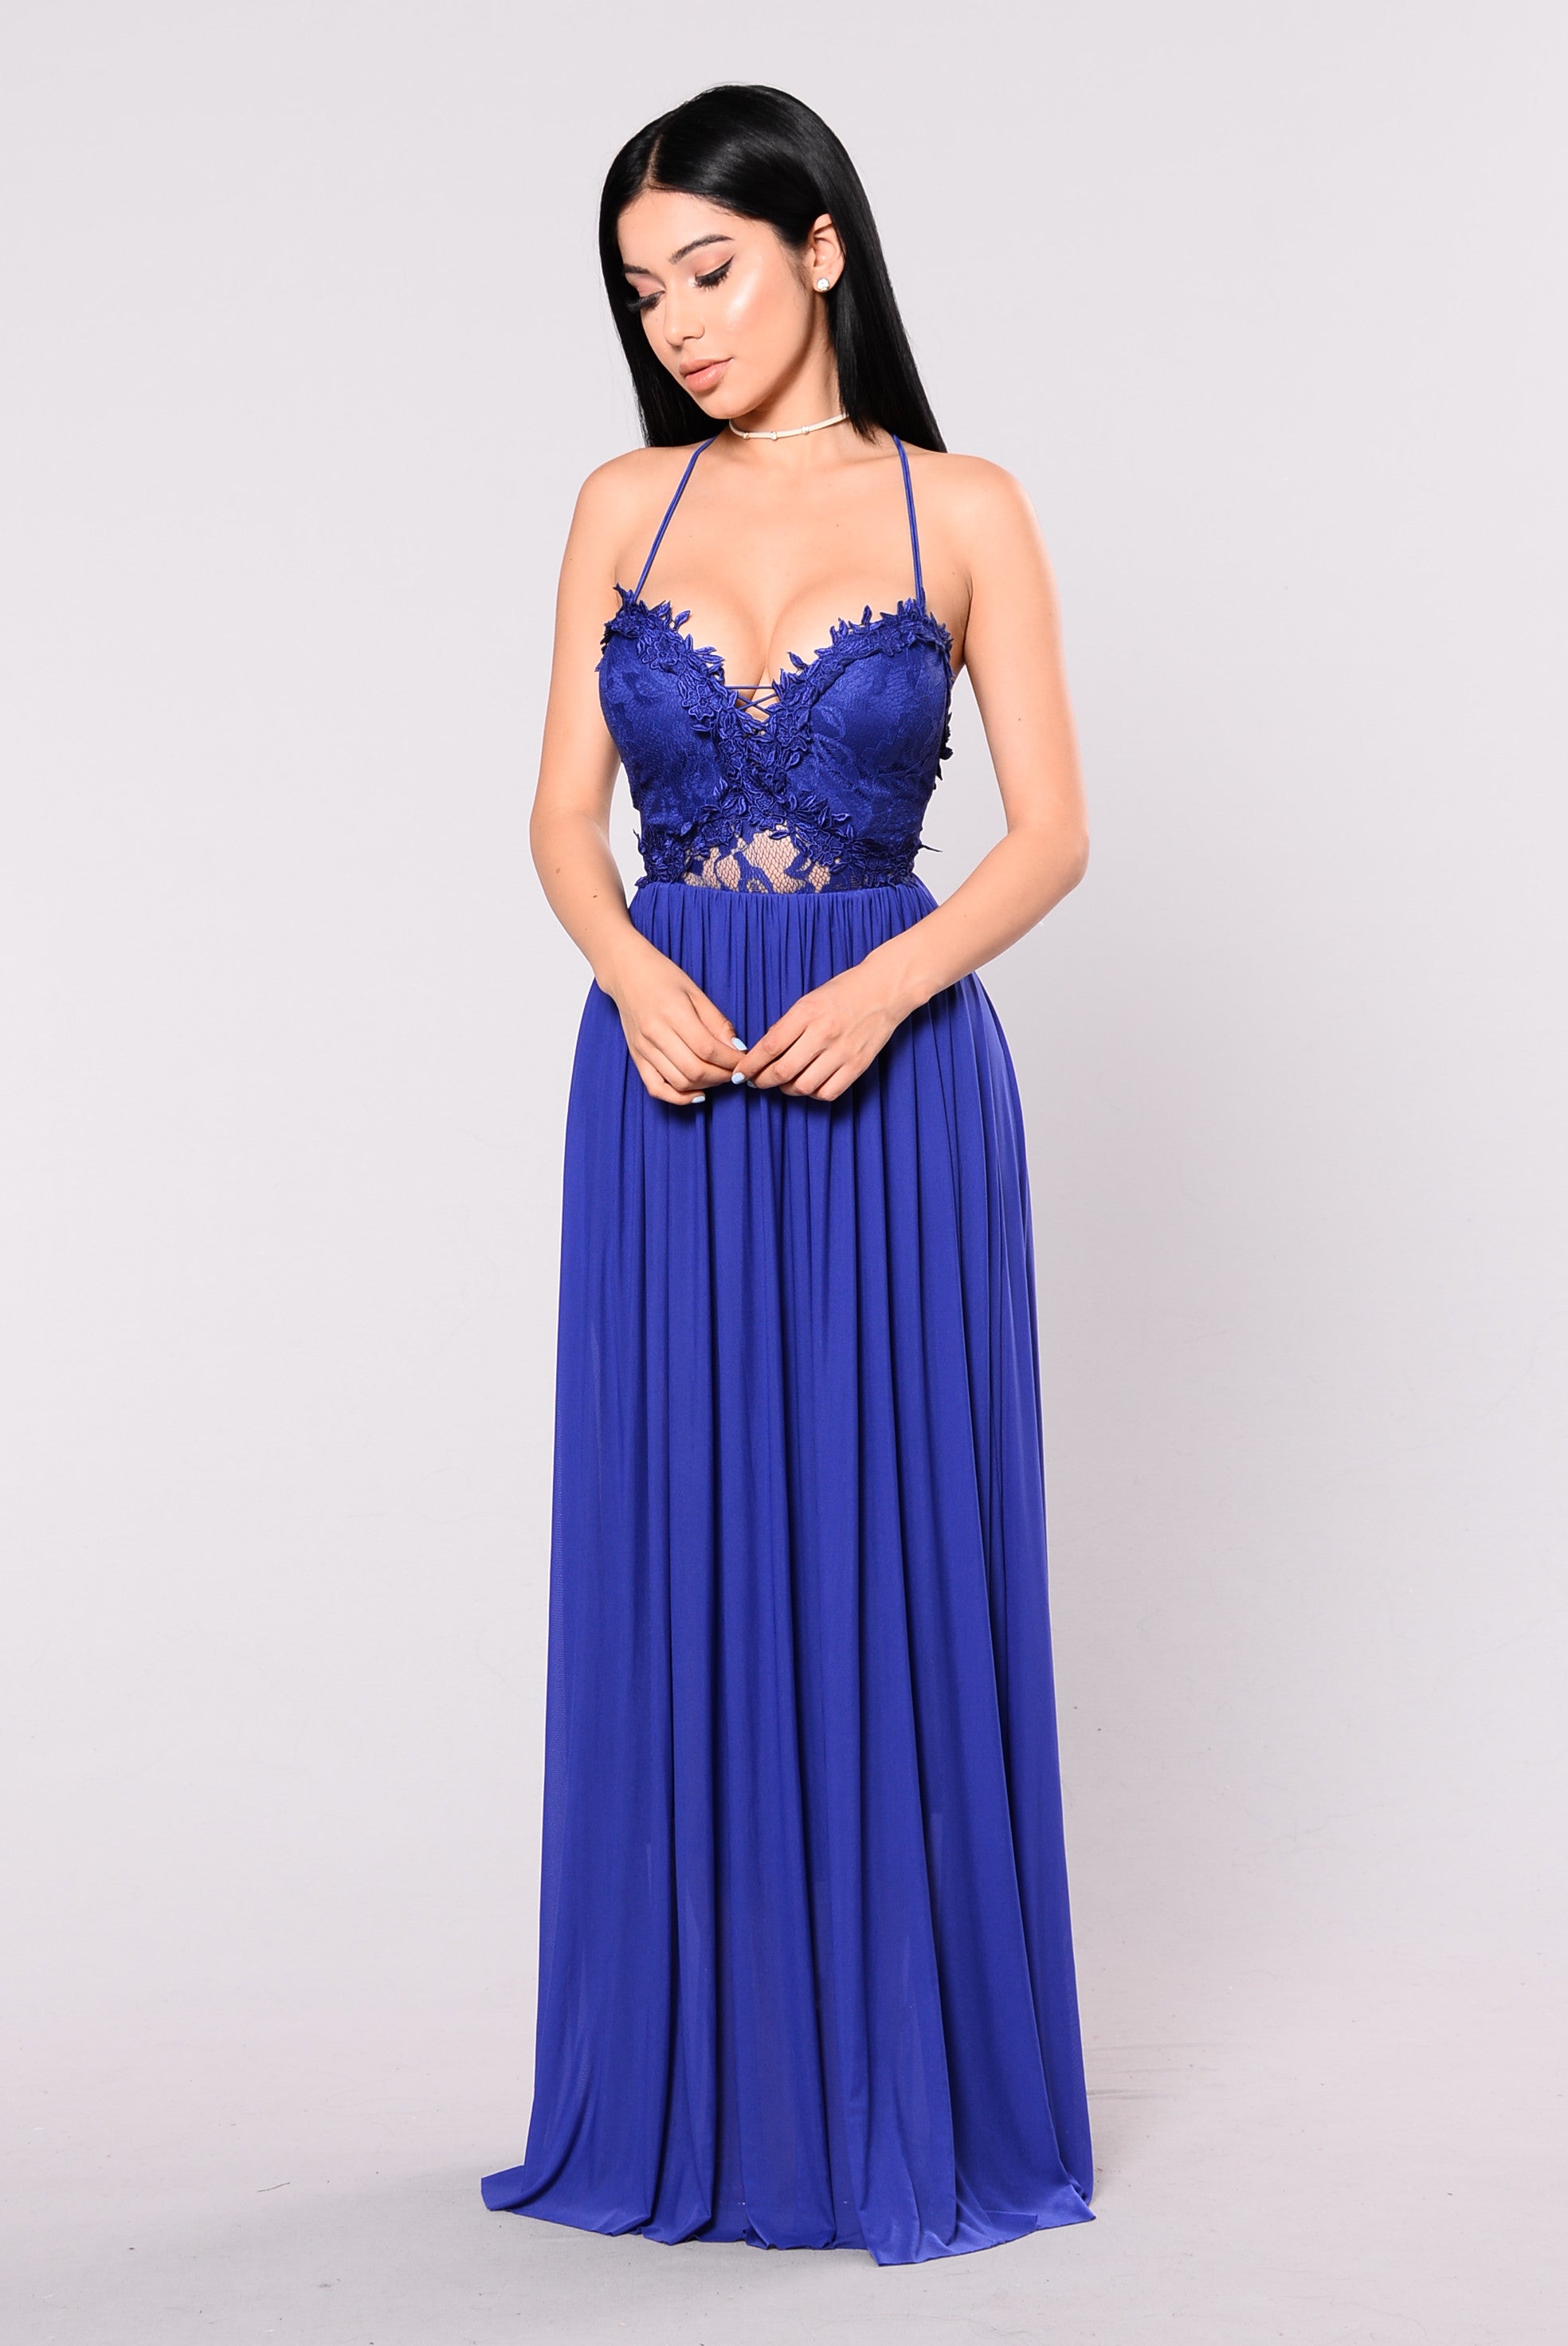 fashion nova blue prom dress